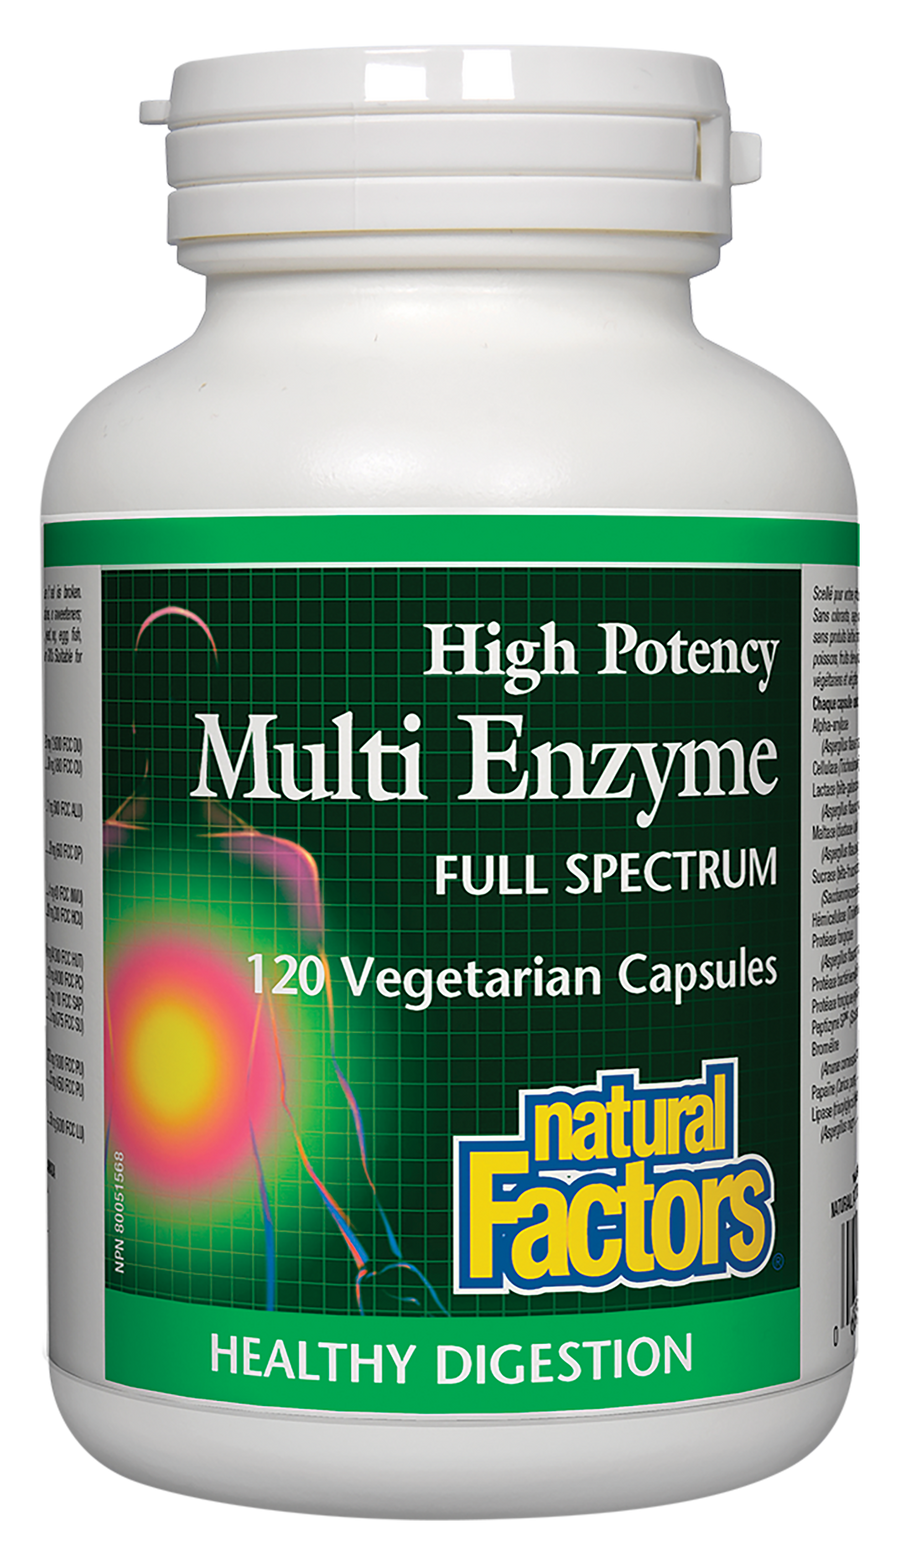 Natural Factors Multi Enzyme High Potency Full Spectrum 120 Veg. Capsules